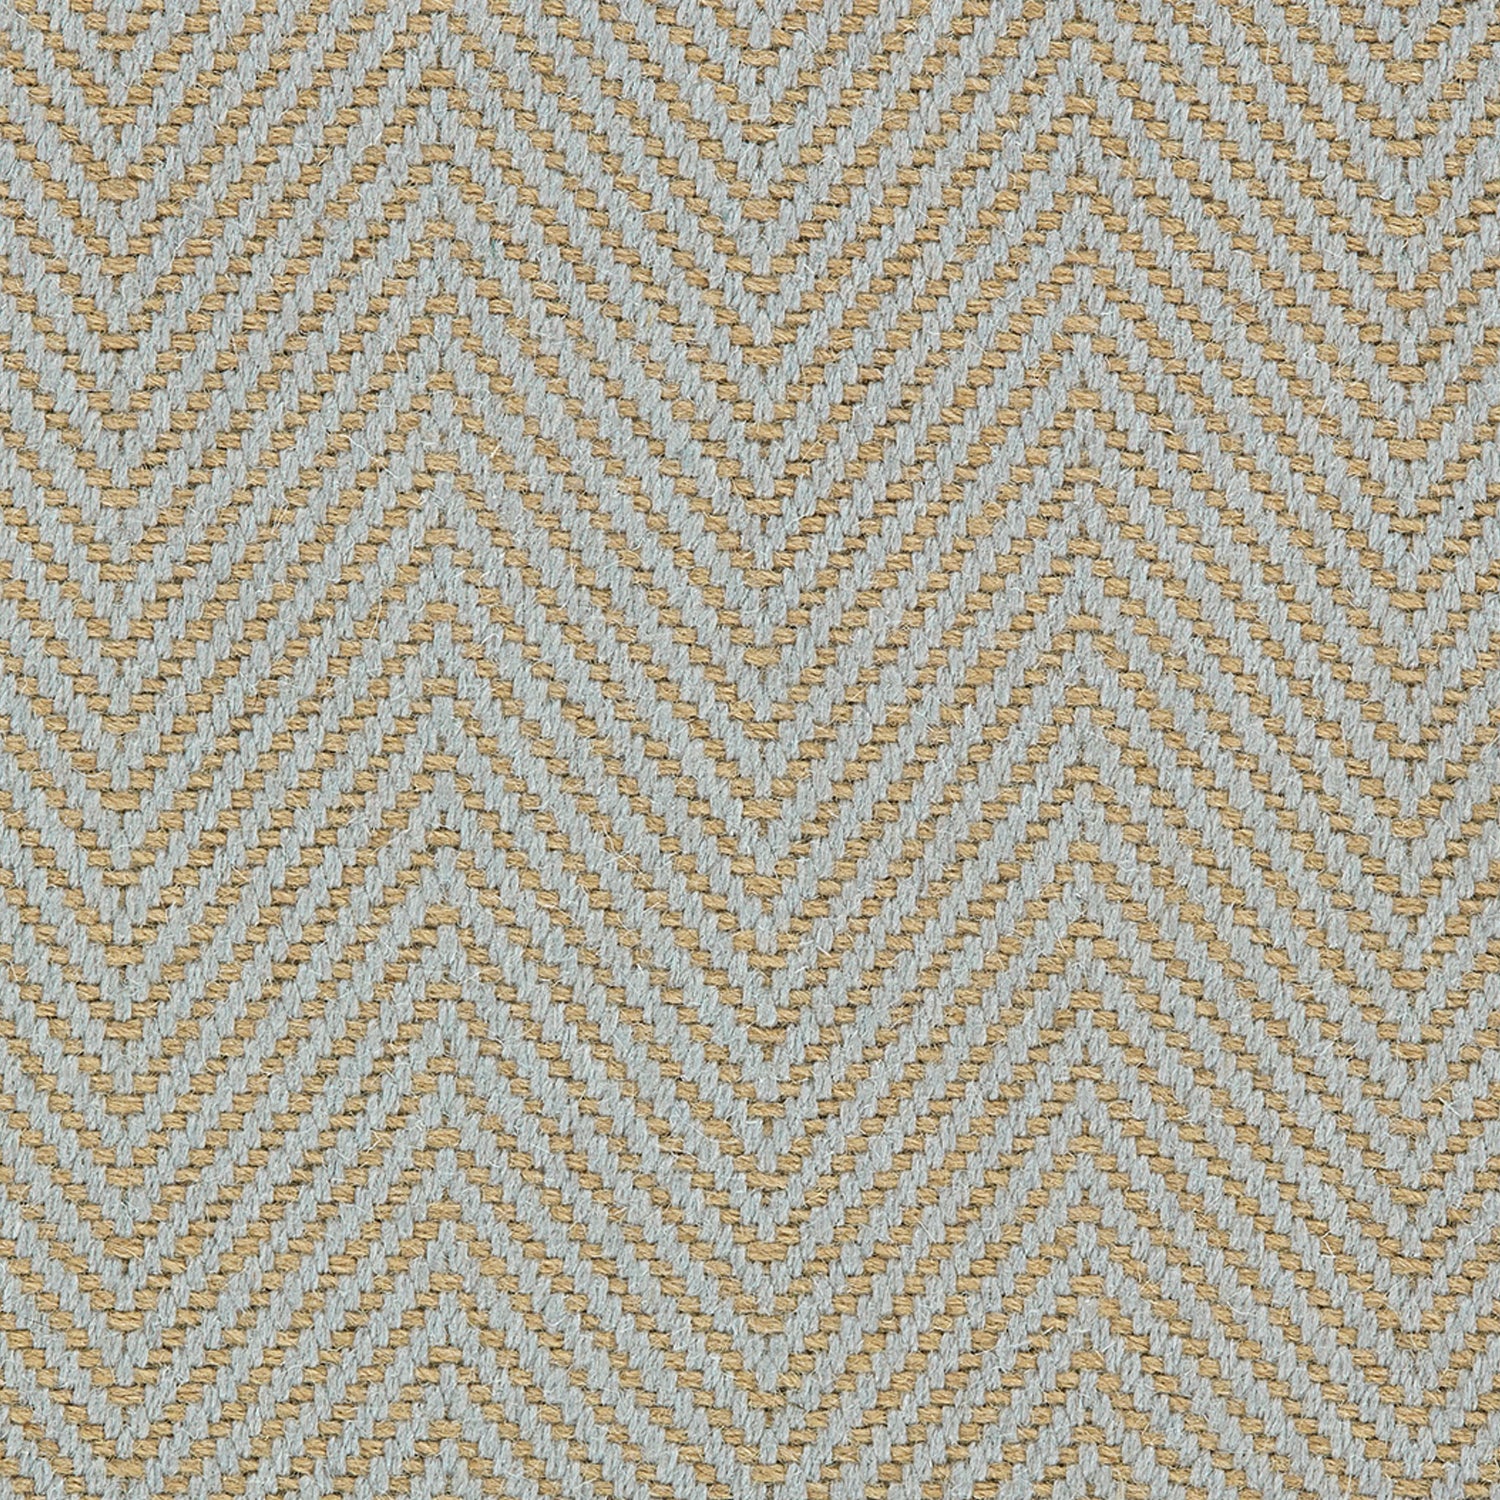 Wool broadloom carpet swatch in a herringbone weave in gold and sky blue.